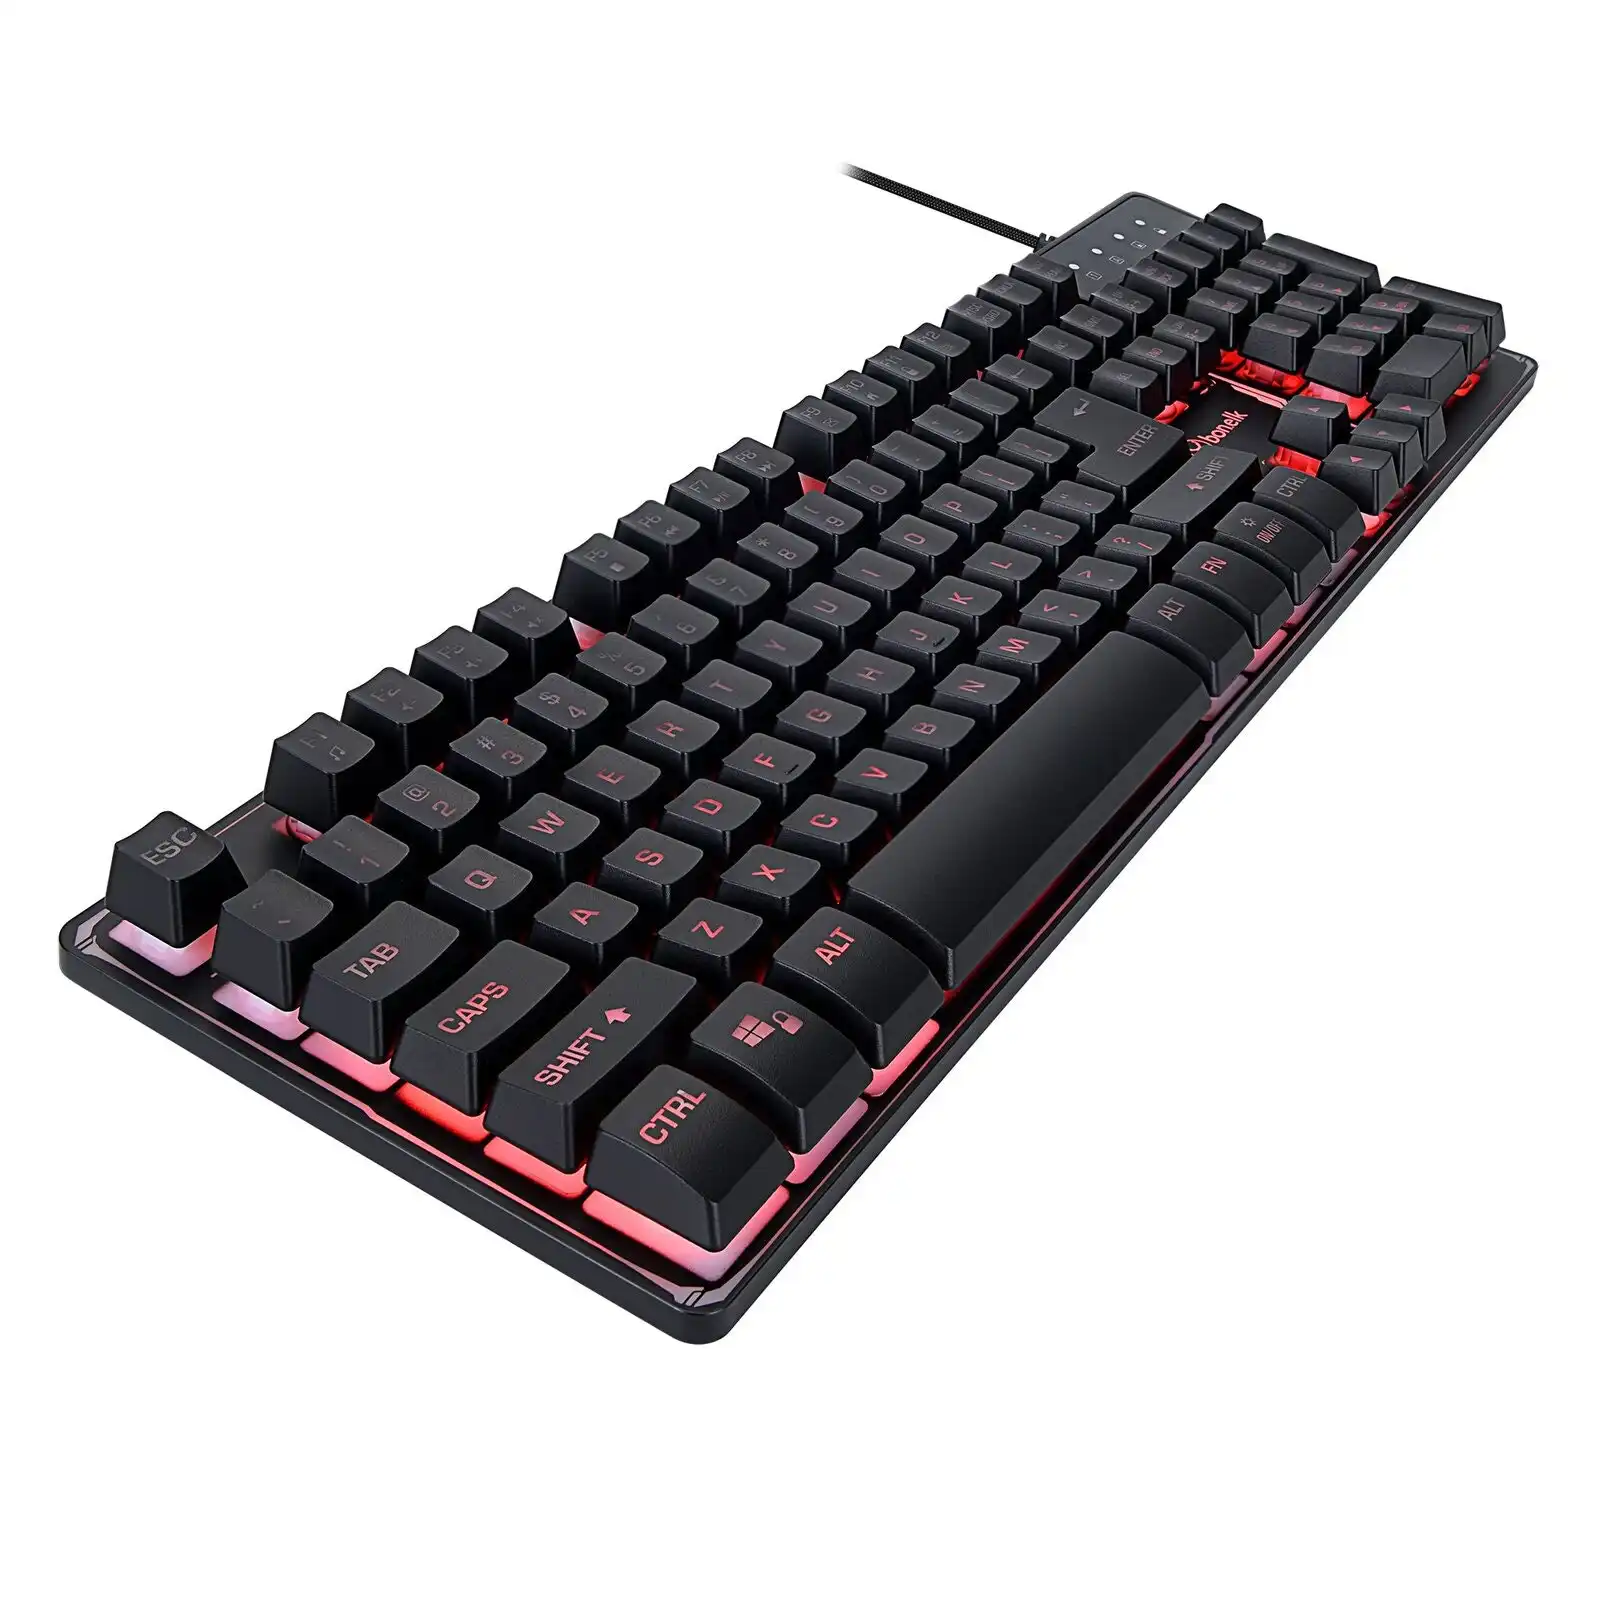 Bonelk K-308 Full Size Anti-Ghosting Gaming LED Backlit Wired USB Keyboard Black